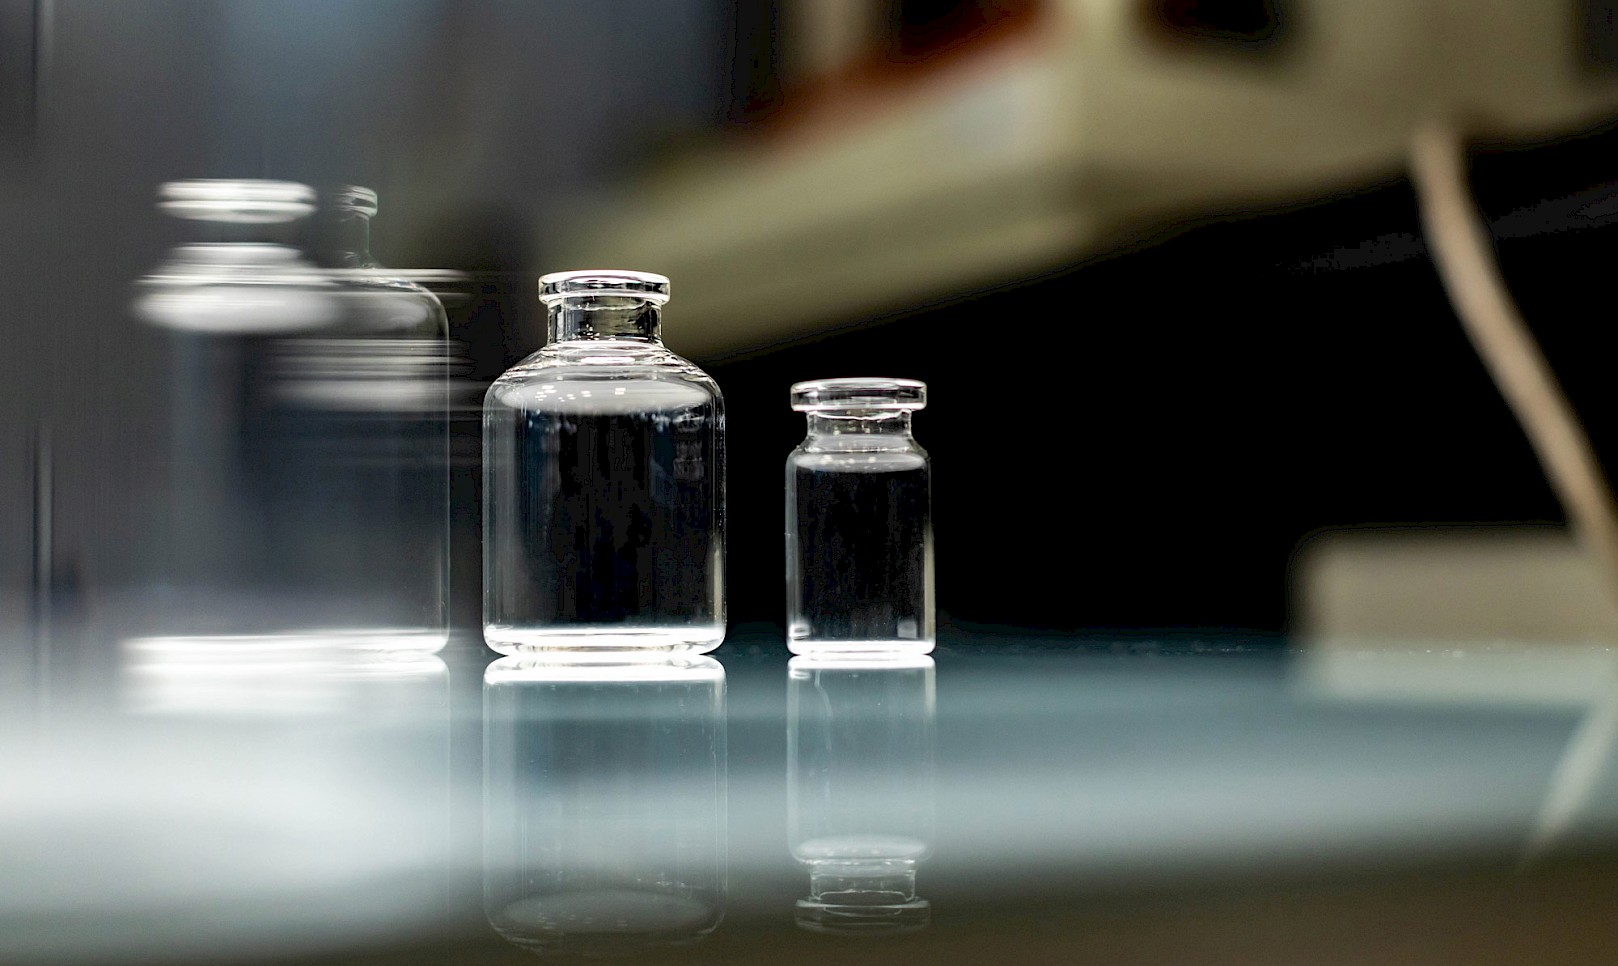 Pharma glass recalls series: Causes and preventative measures